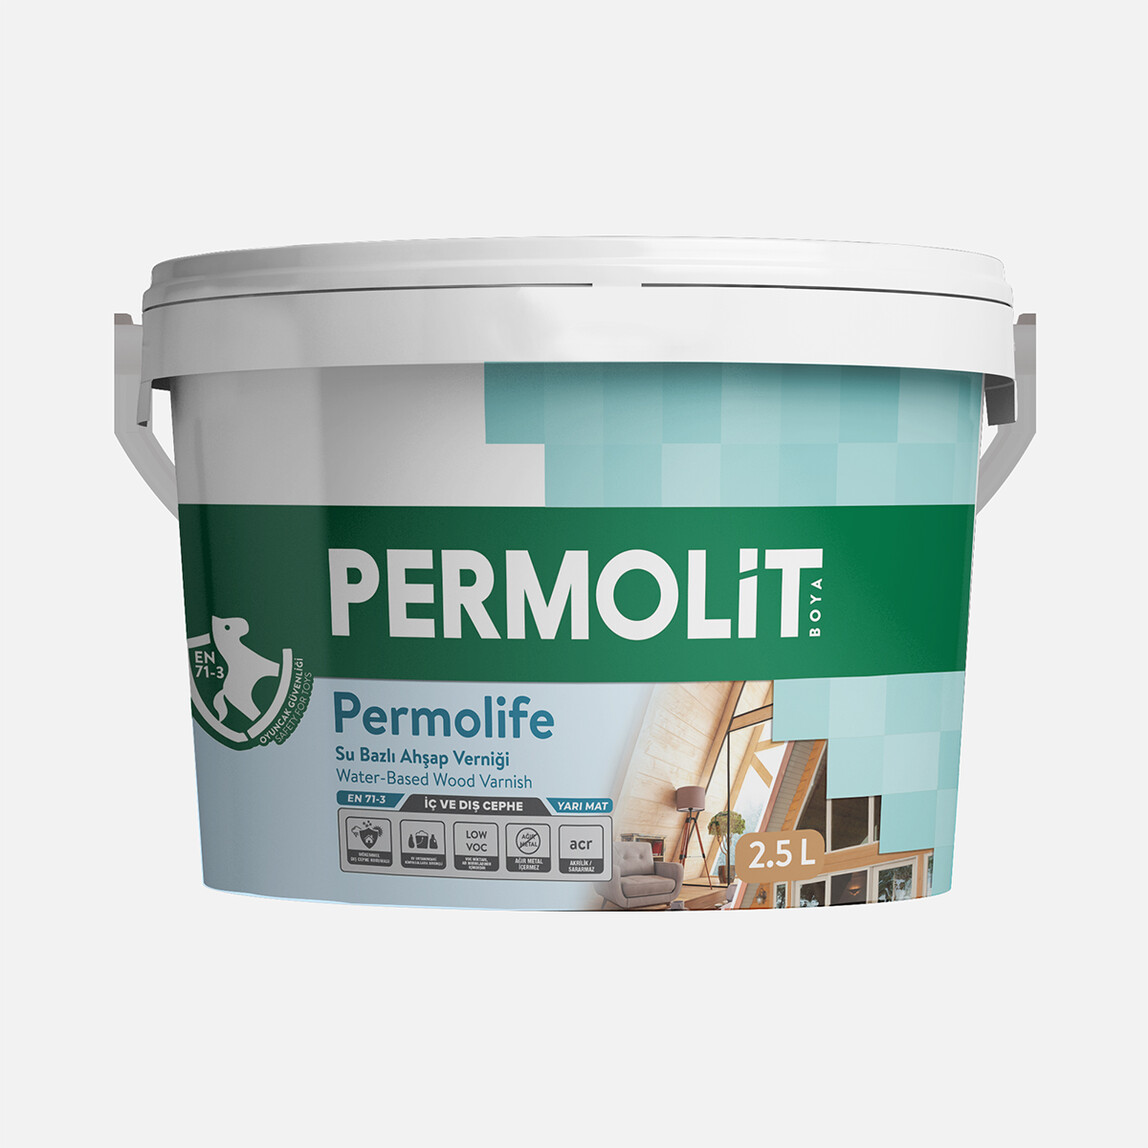    Permolit 2,50 L Permolife Su Bazlı Ahşap Verniği Ceviz 